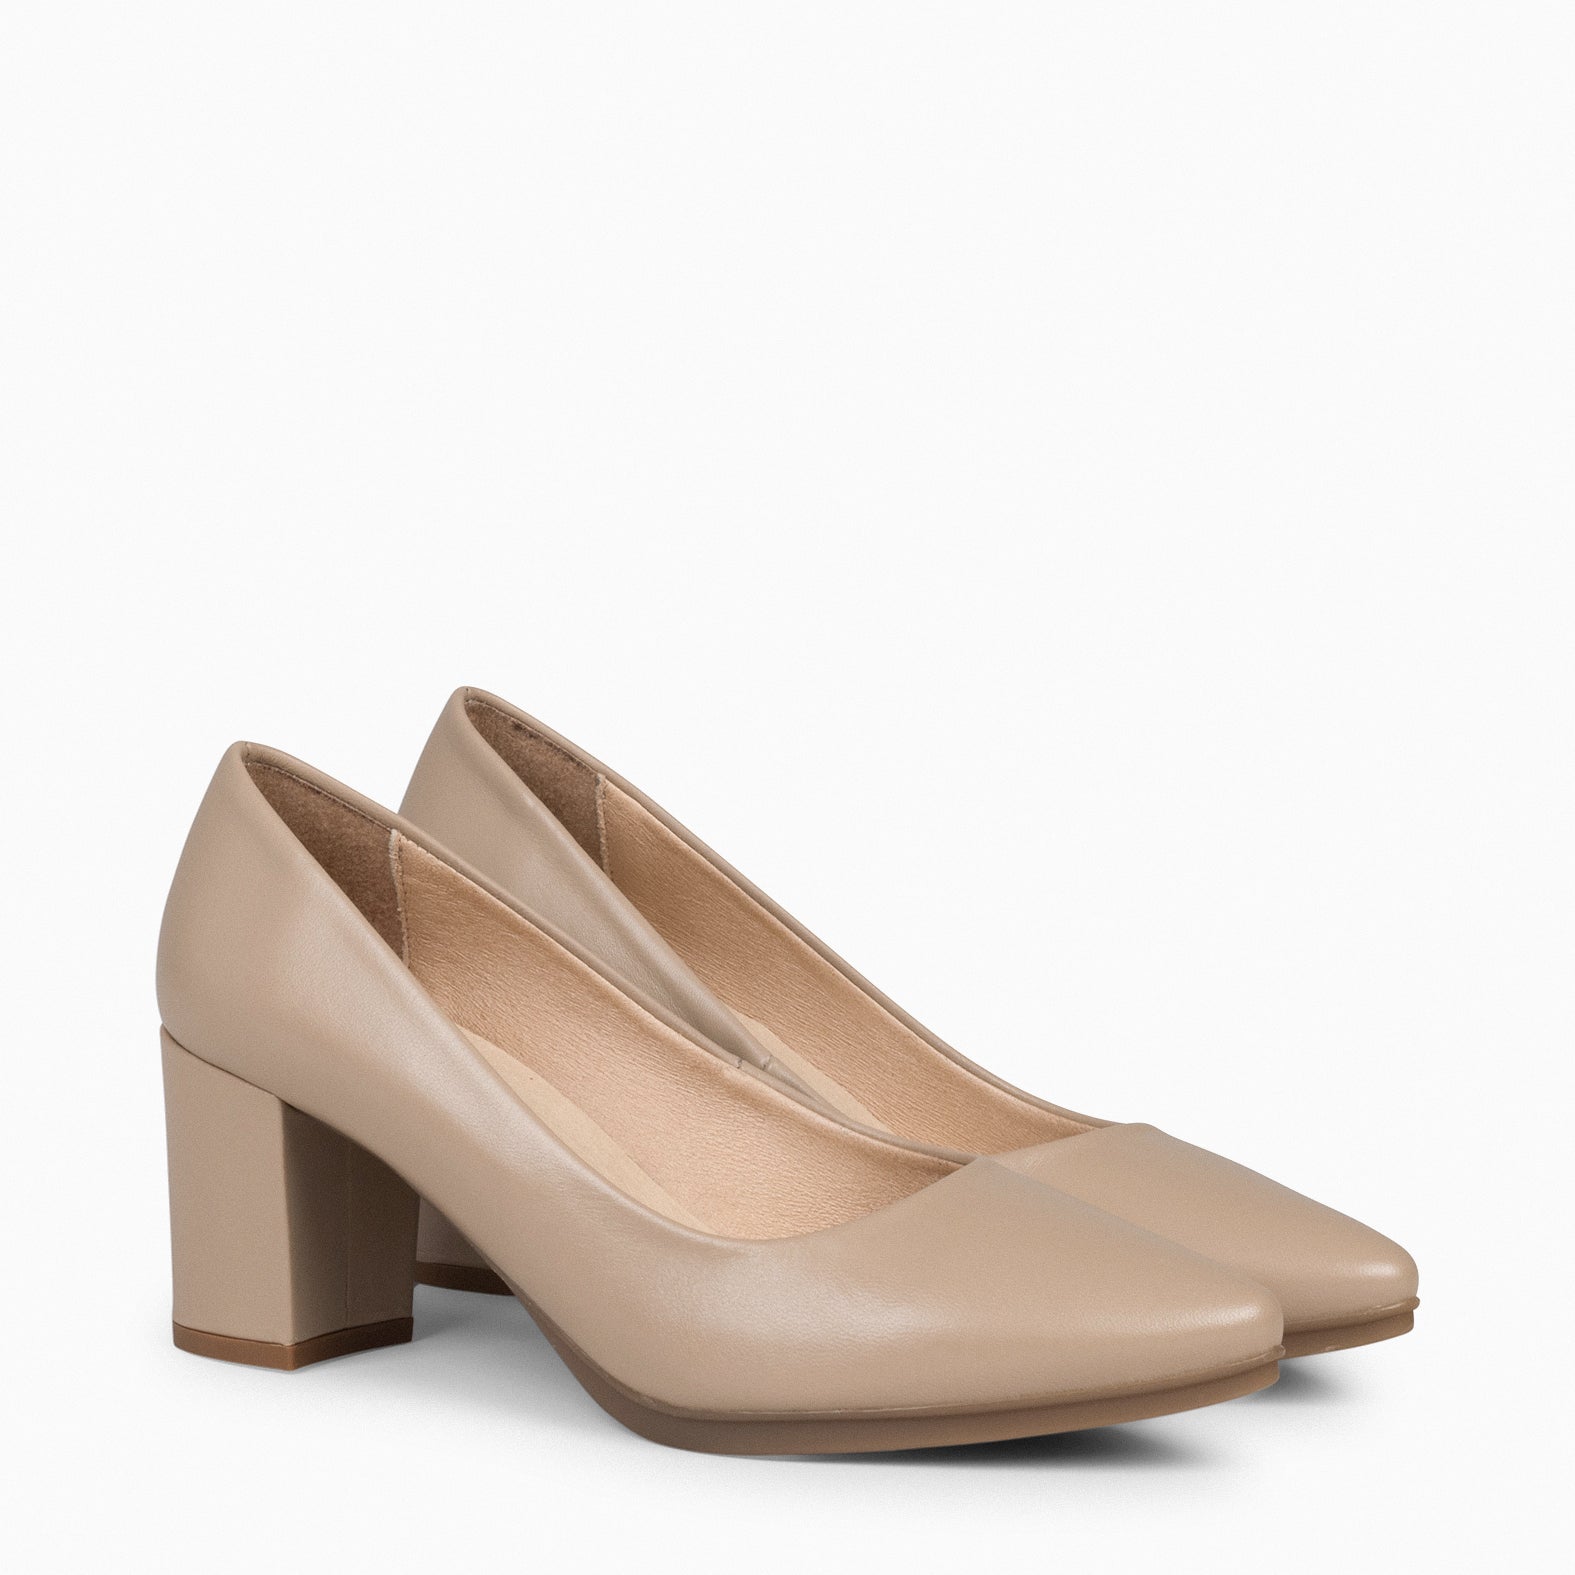 URBAN S SALON – TAN nappa leather mid heel